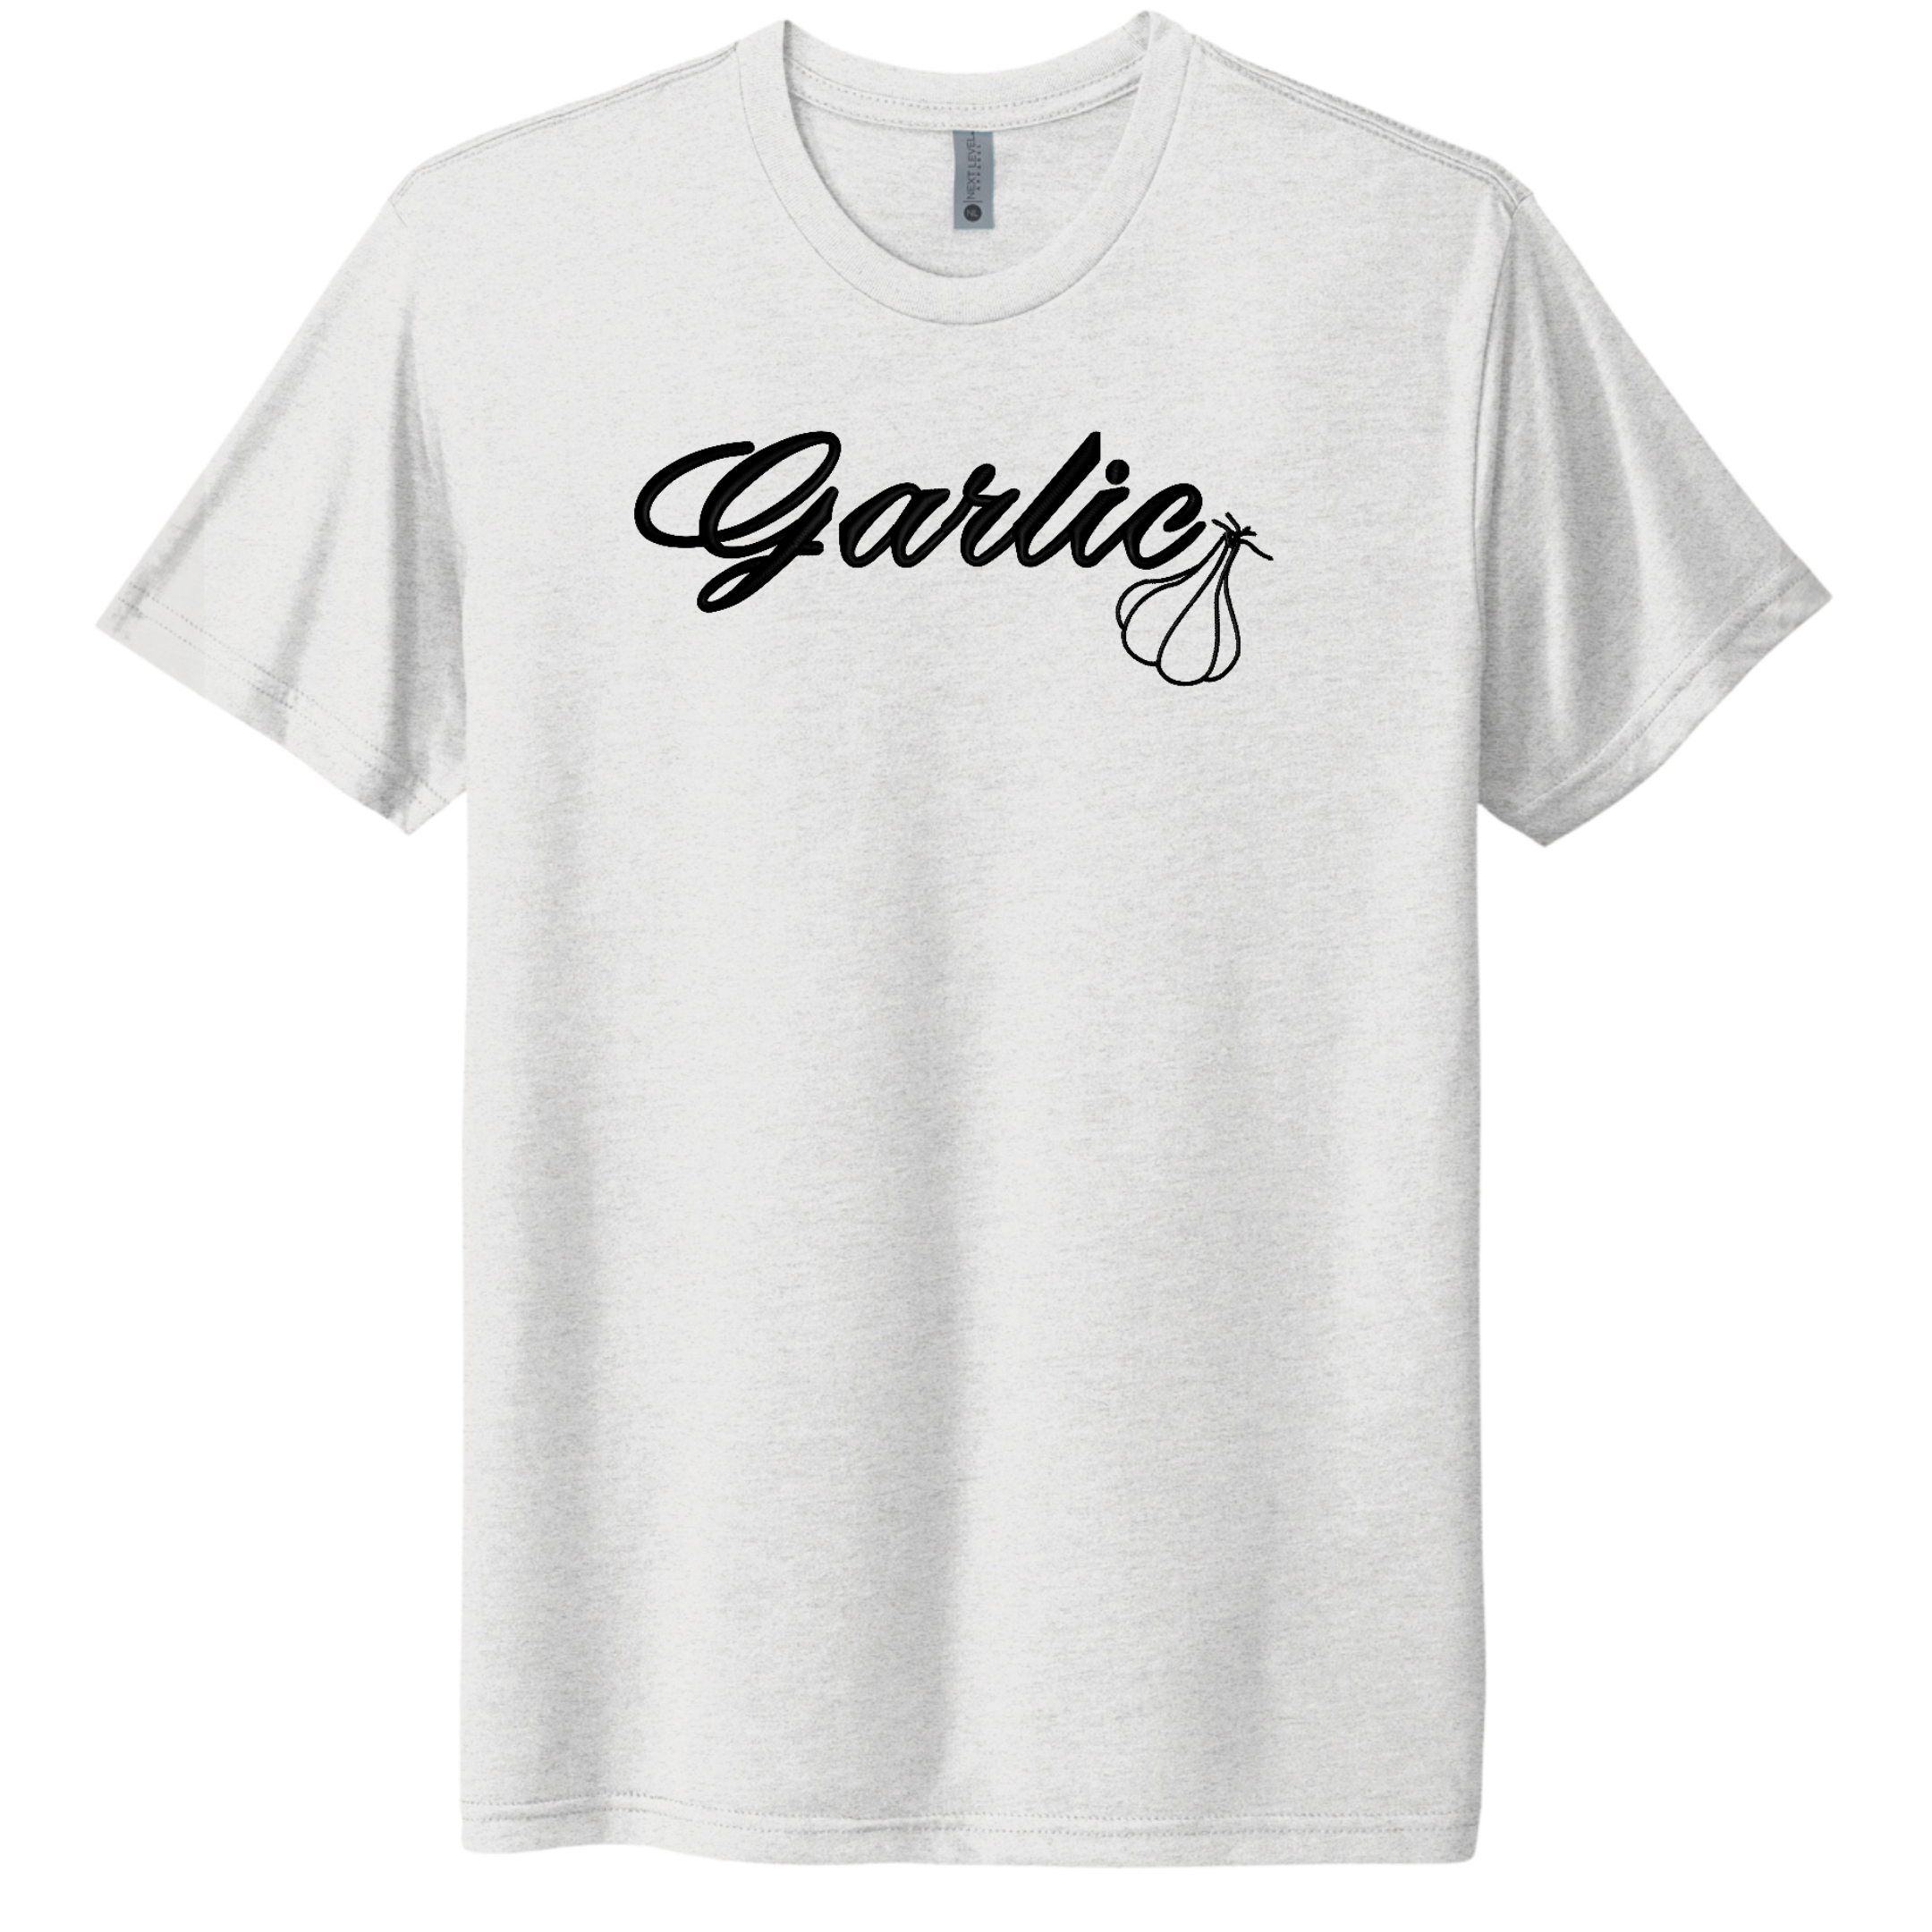 Garlic Embroidered Tee Shirt, Unisex